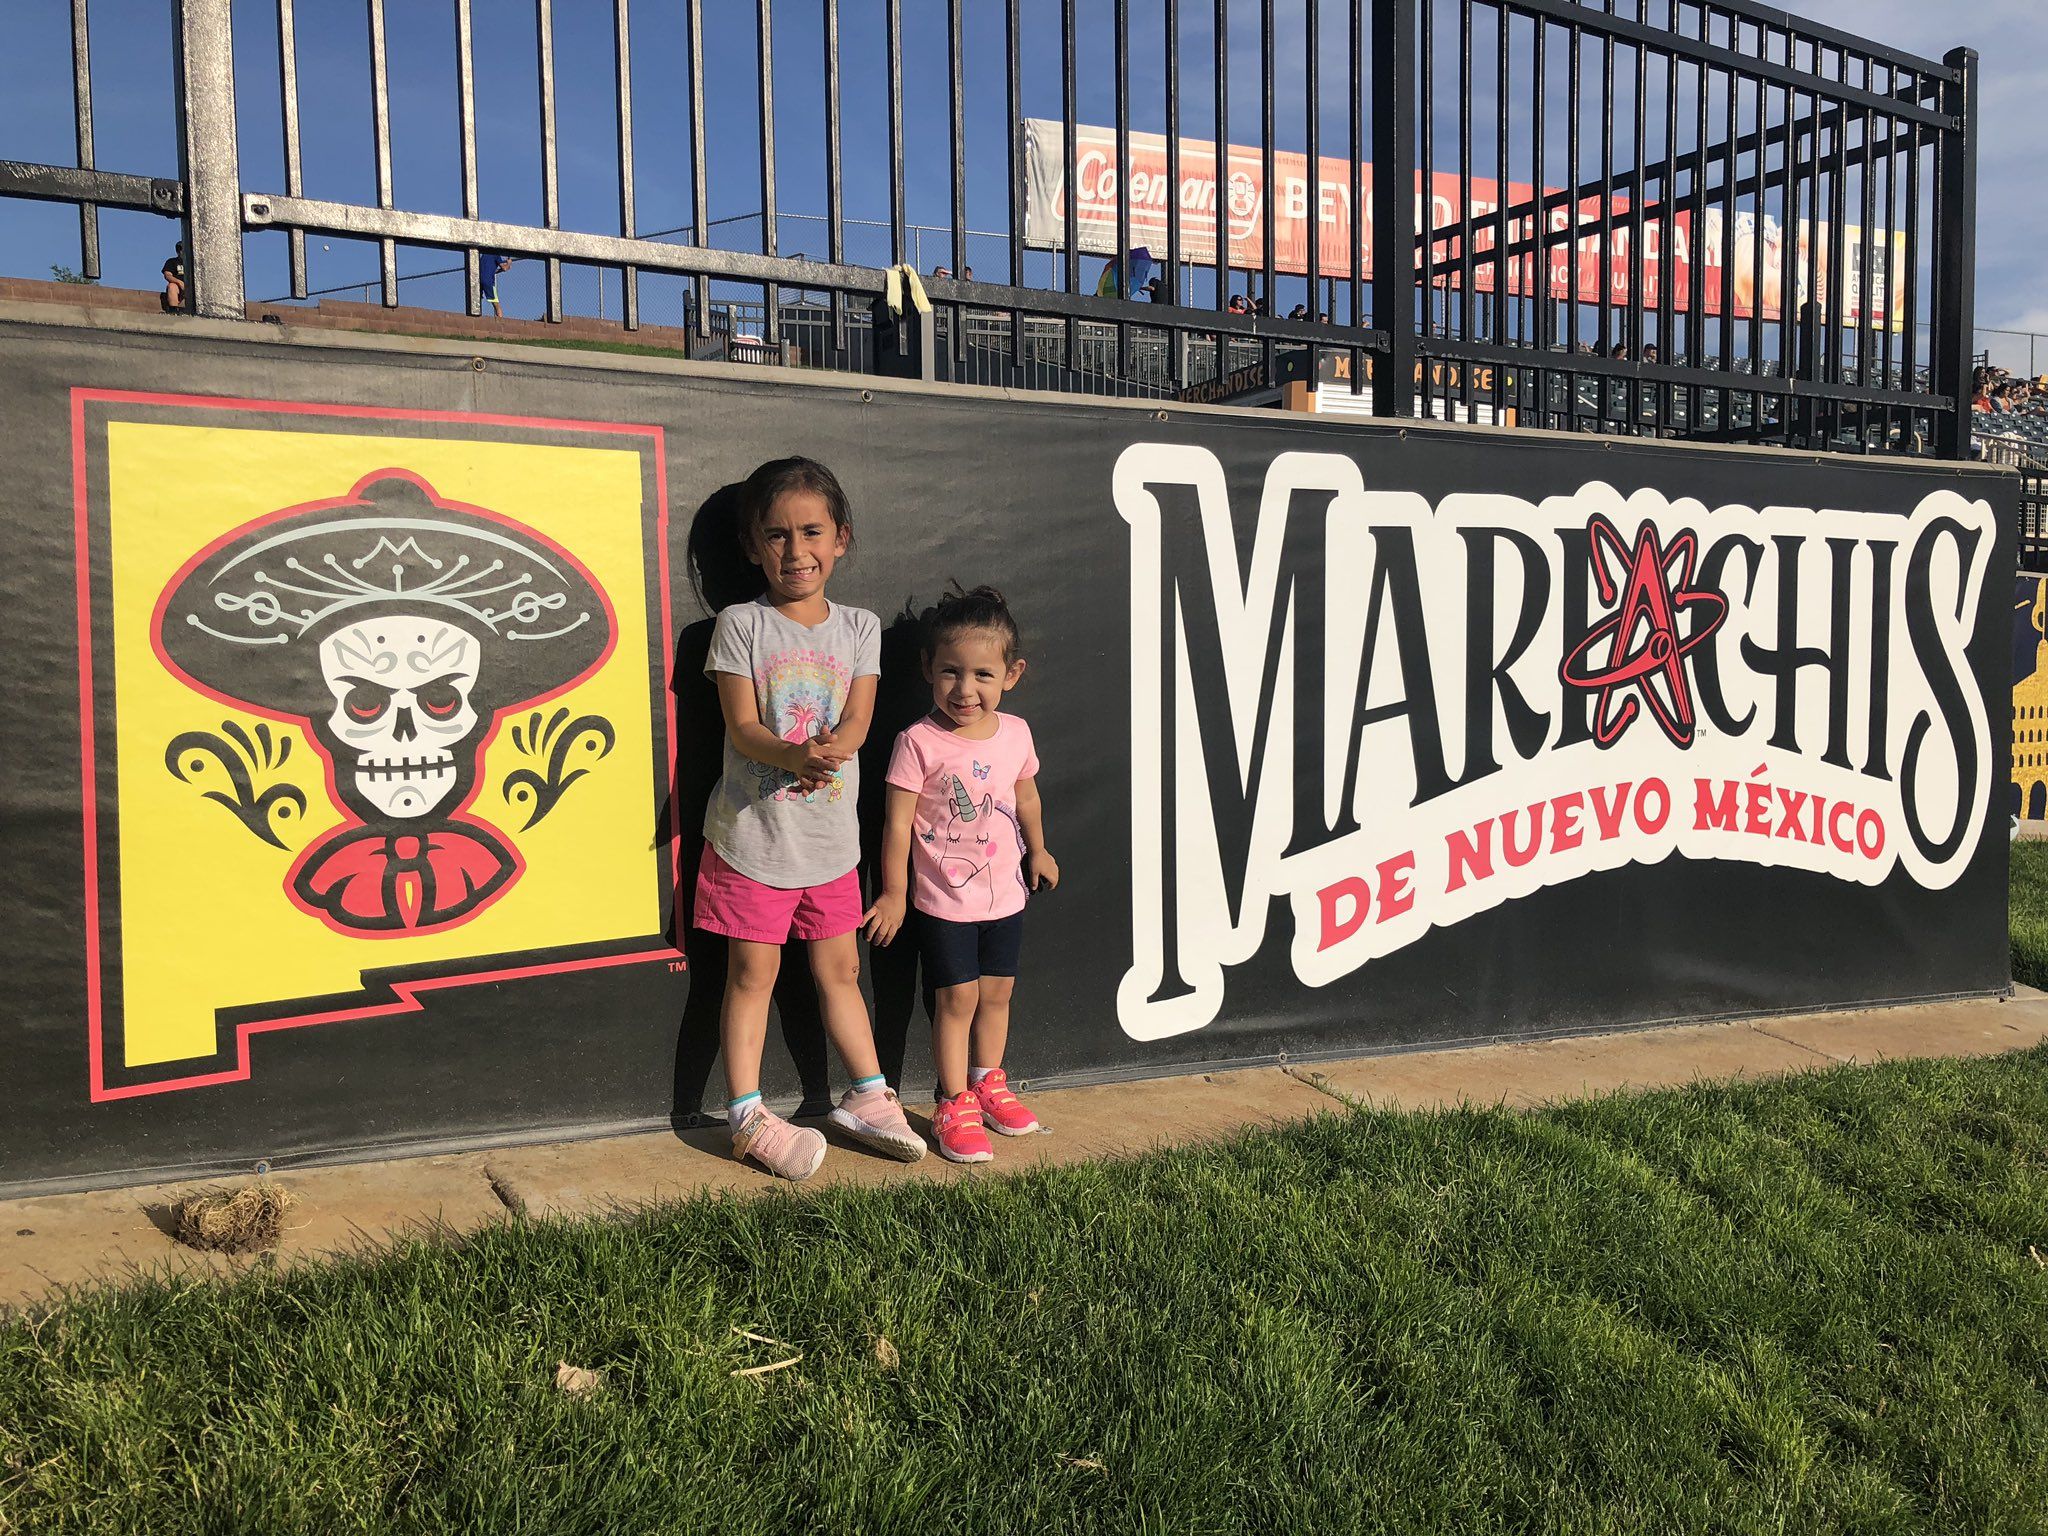 Two girls stand in fron the Mariachis de Nuevo México logo in Albuquerque, N.M.